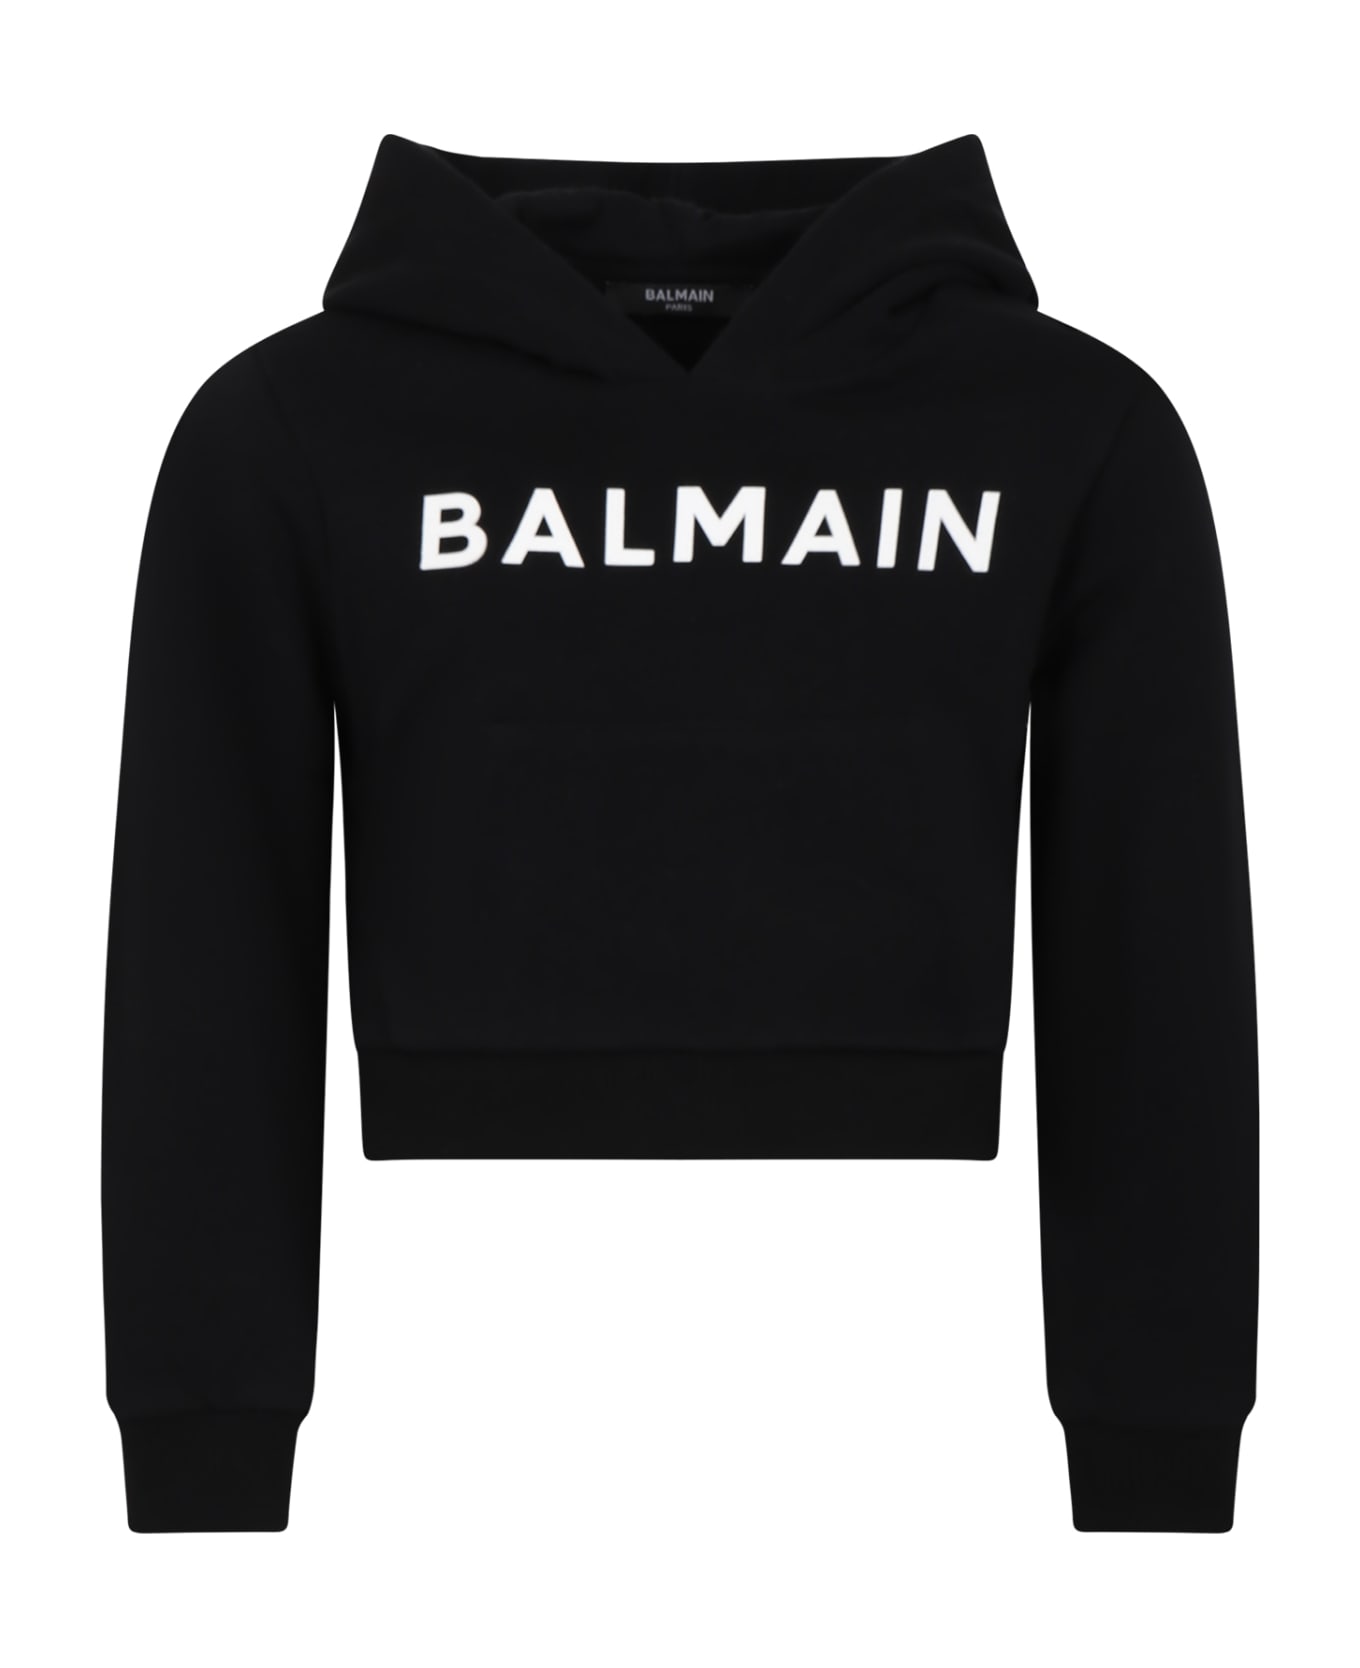 Balmain Black Sweatshirt For Girl With Logo - Black